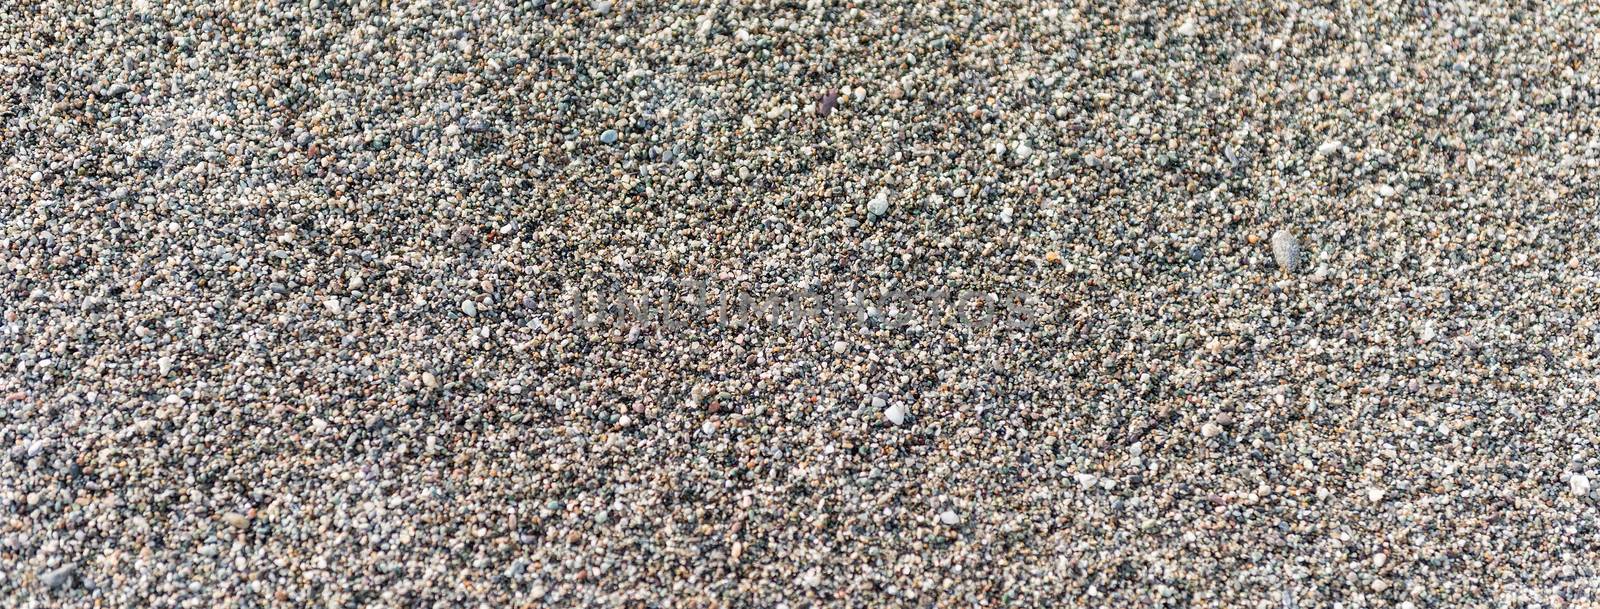 Detailed sand texture on a sandy beach by marcorubino